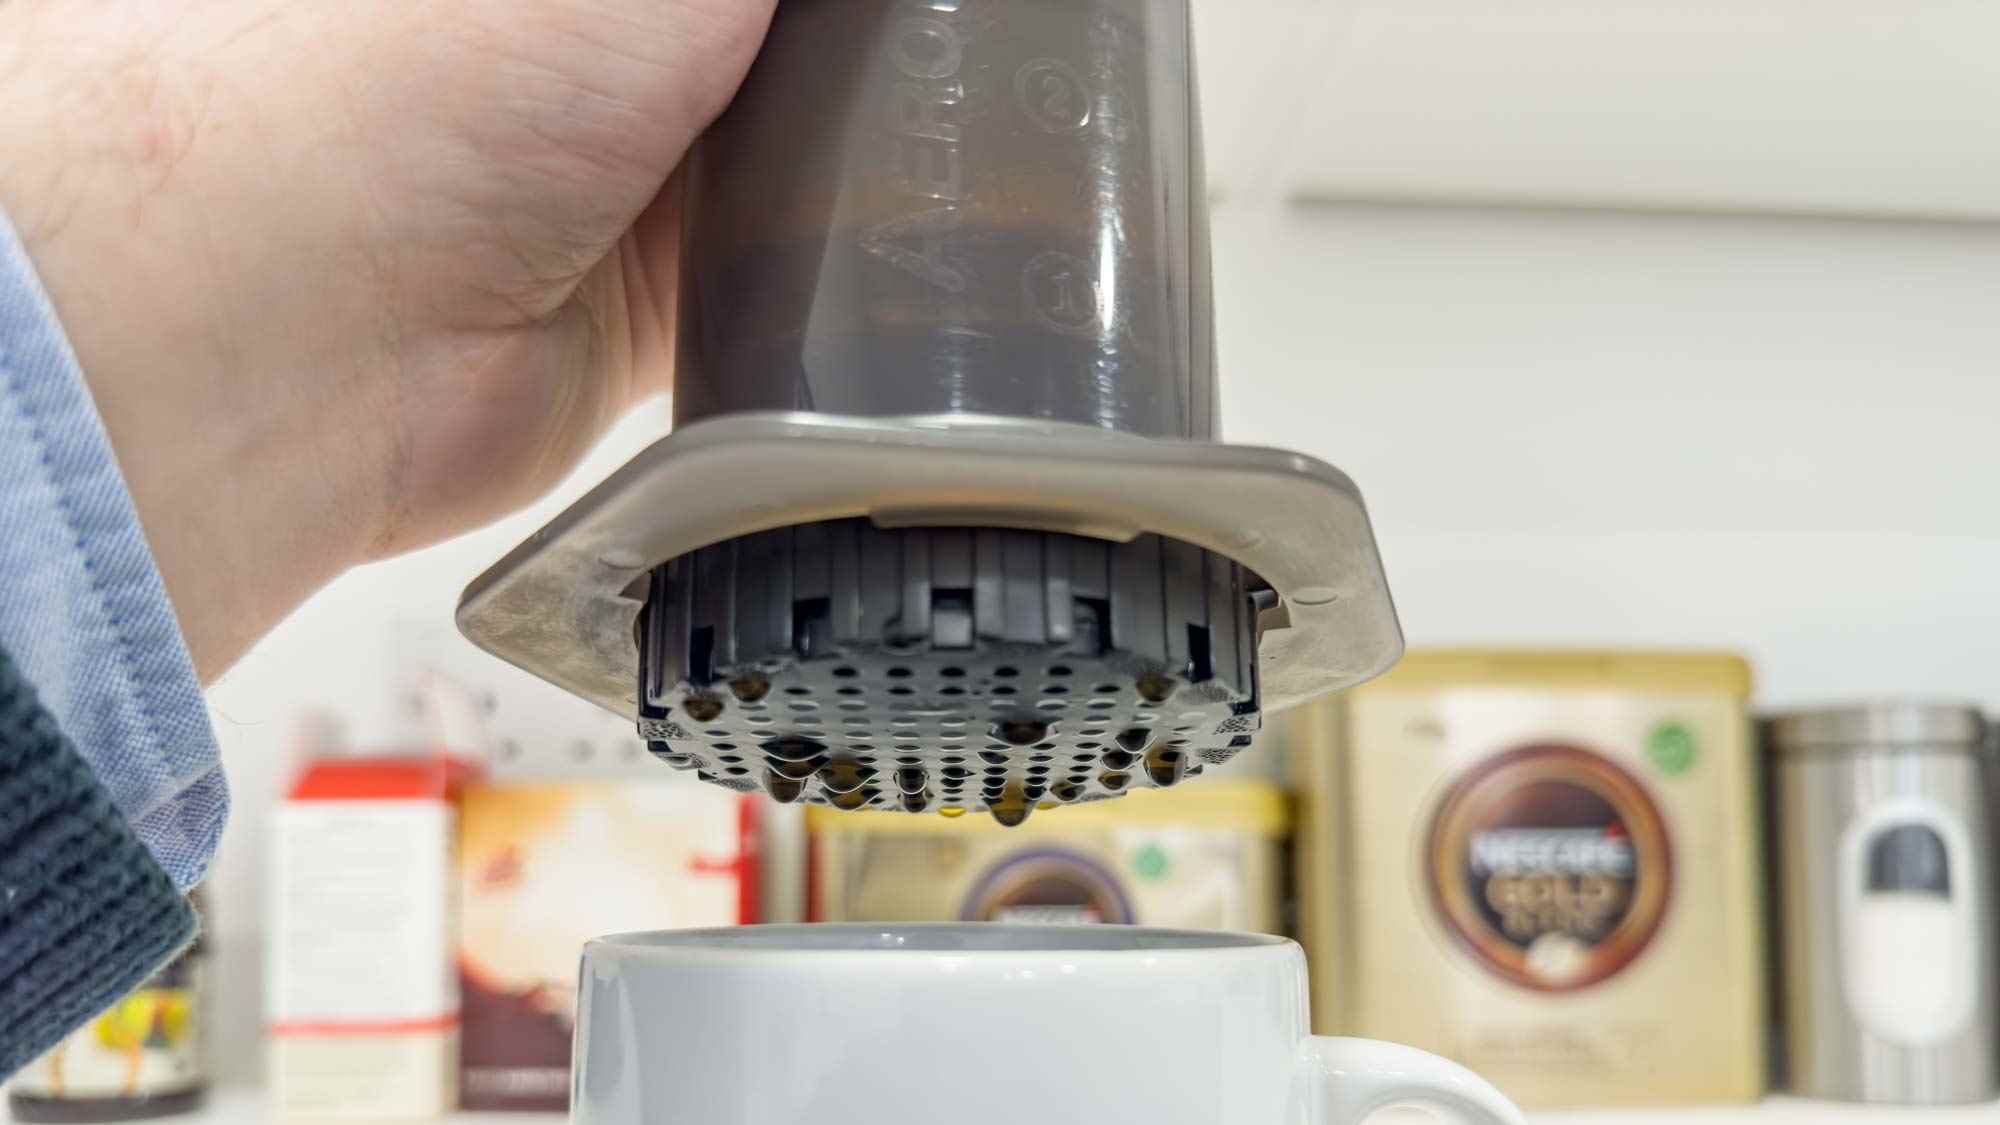 Aeropress kahve makinesi kullanımda